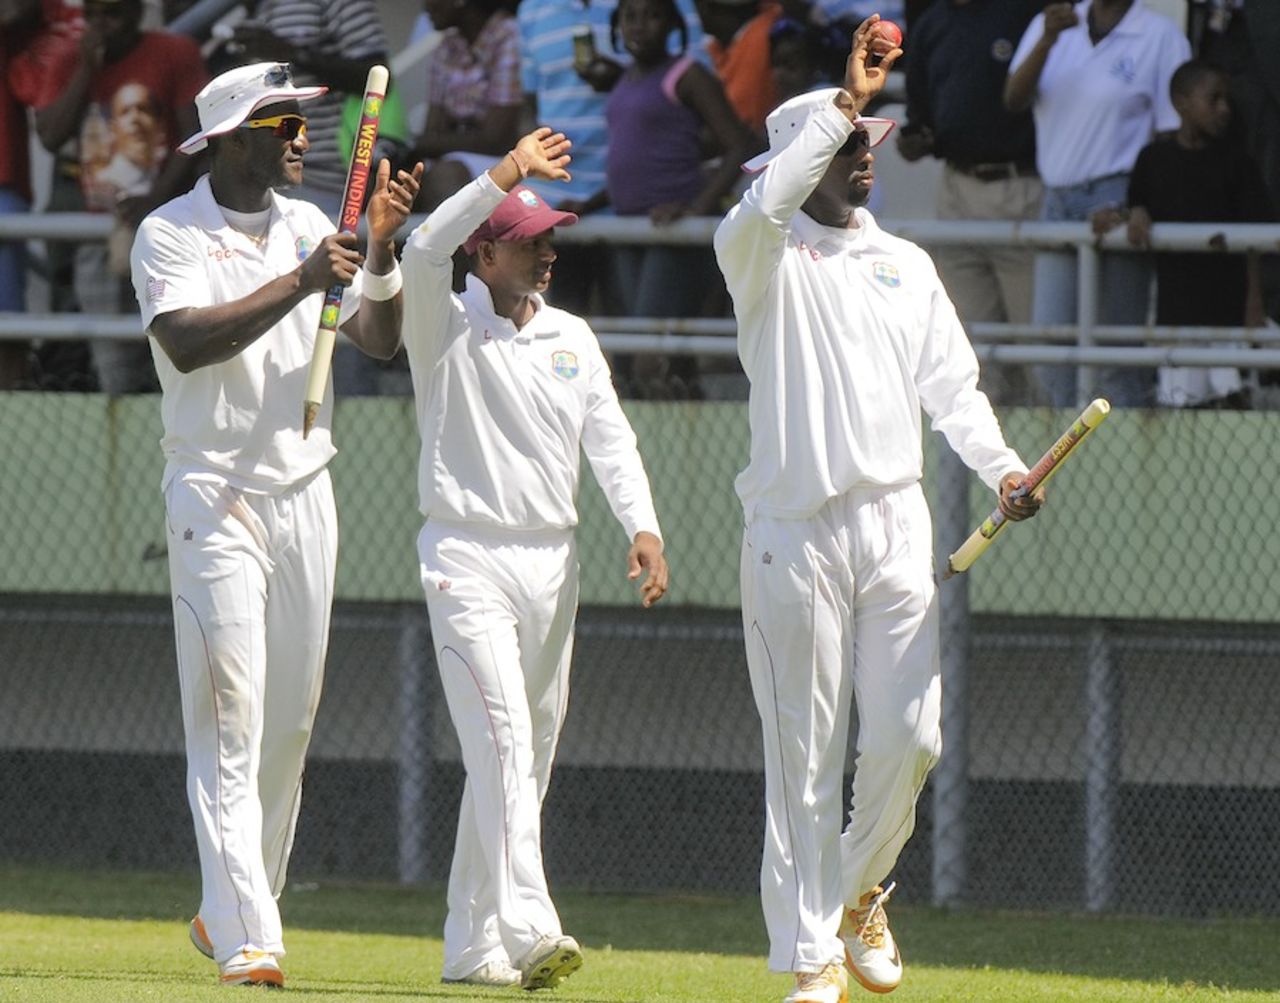 Darren Sammy, Shivnarine Chanderpaul and Shane Shillingford walk around the ground, West Indies v Zimbabwe, 2nd Test, Dominica, 3rd day, March 22, 2013